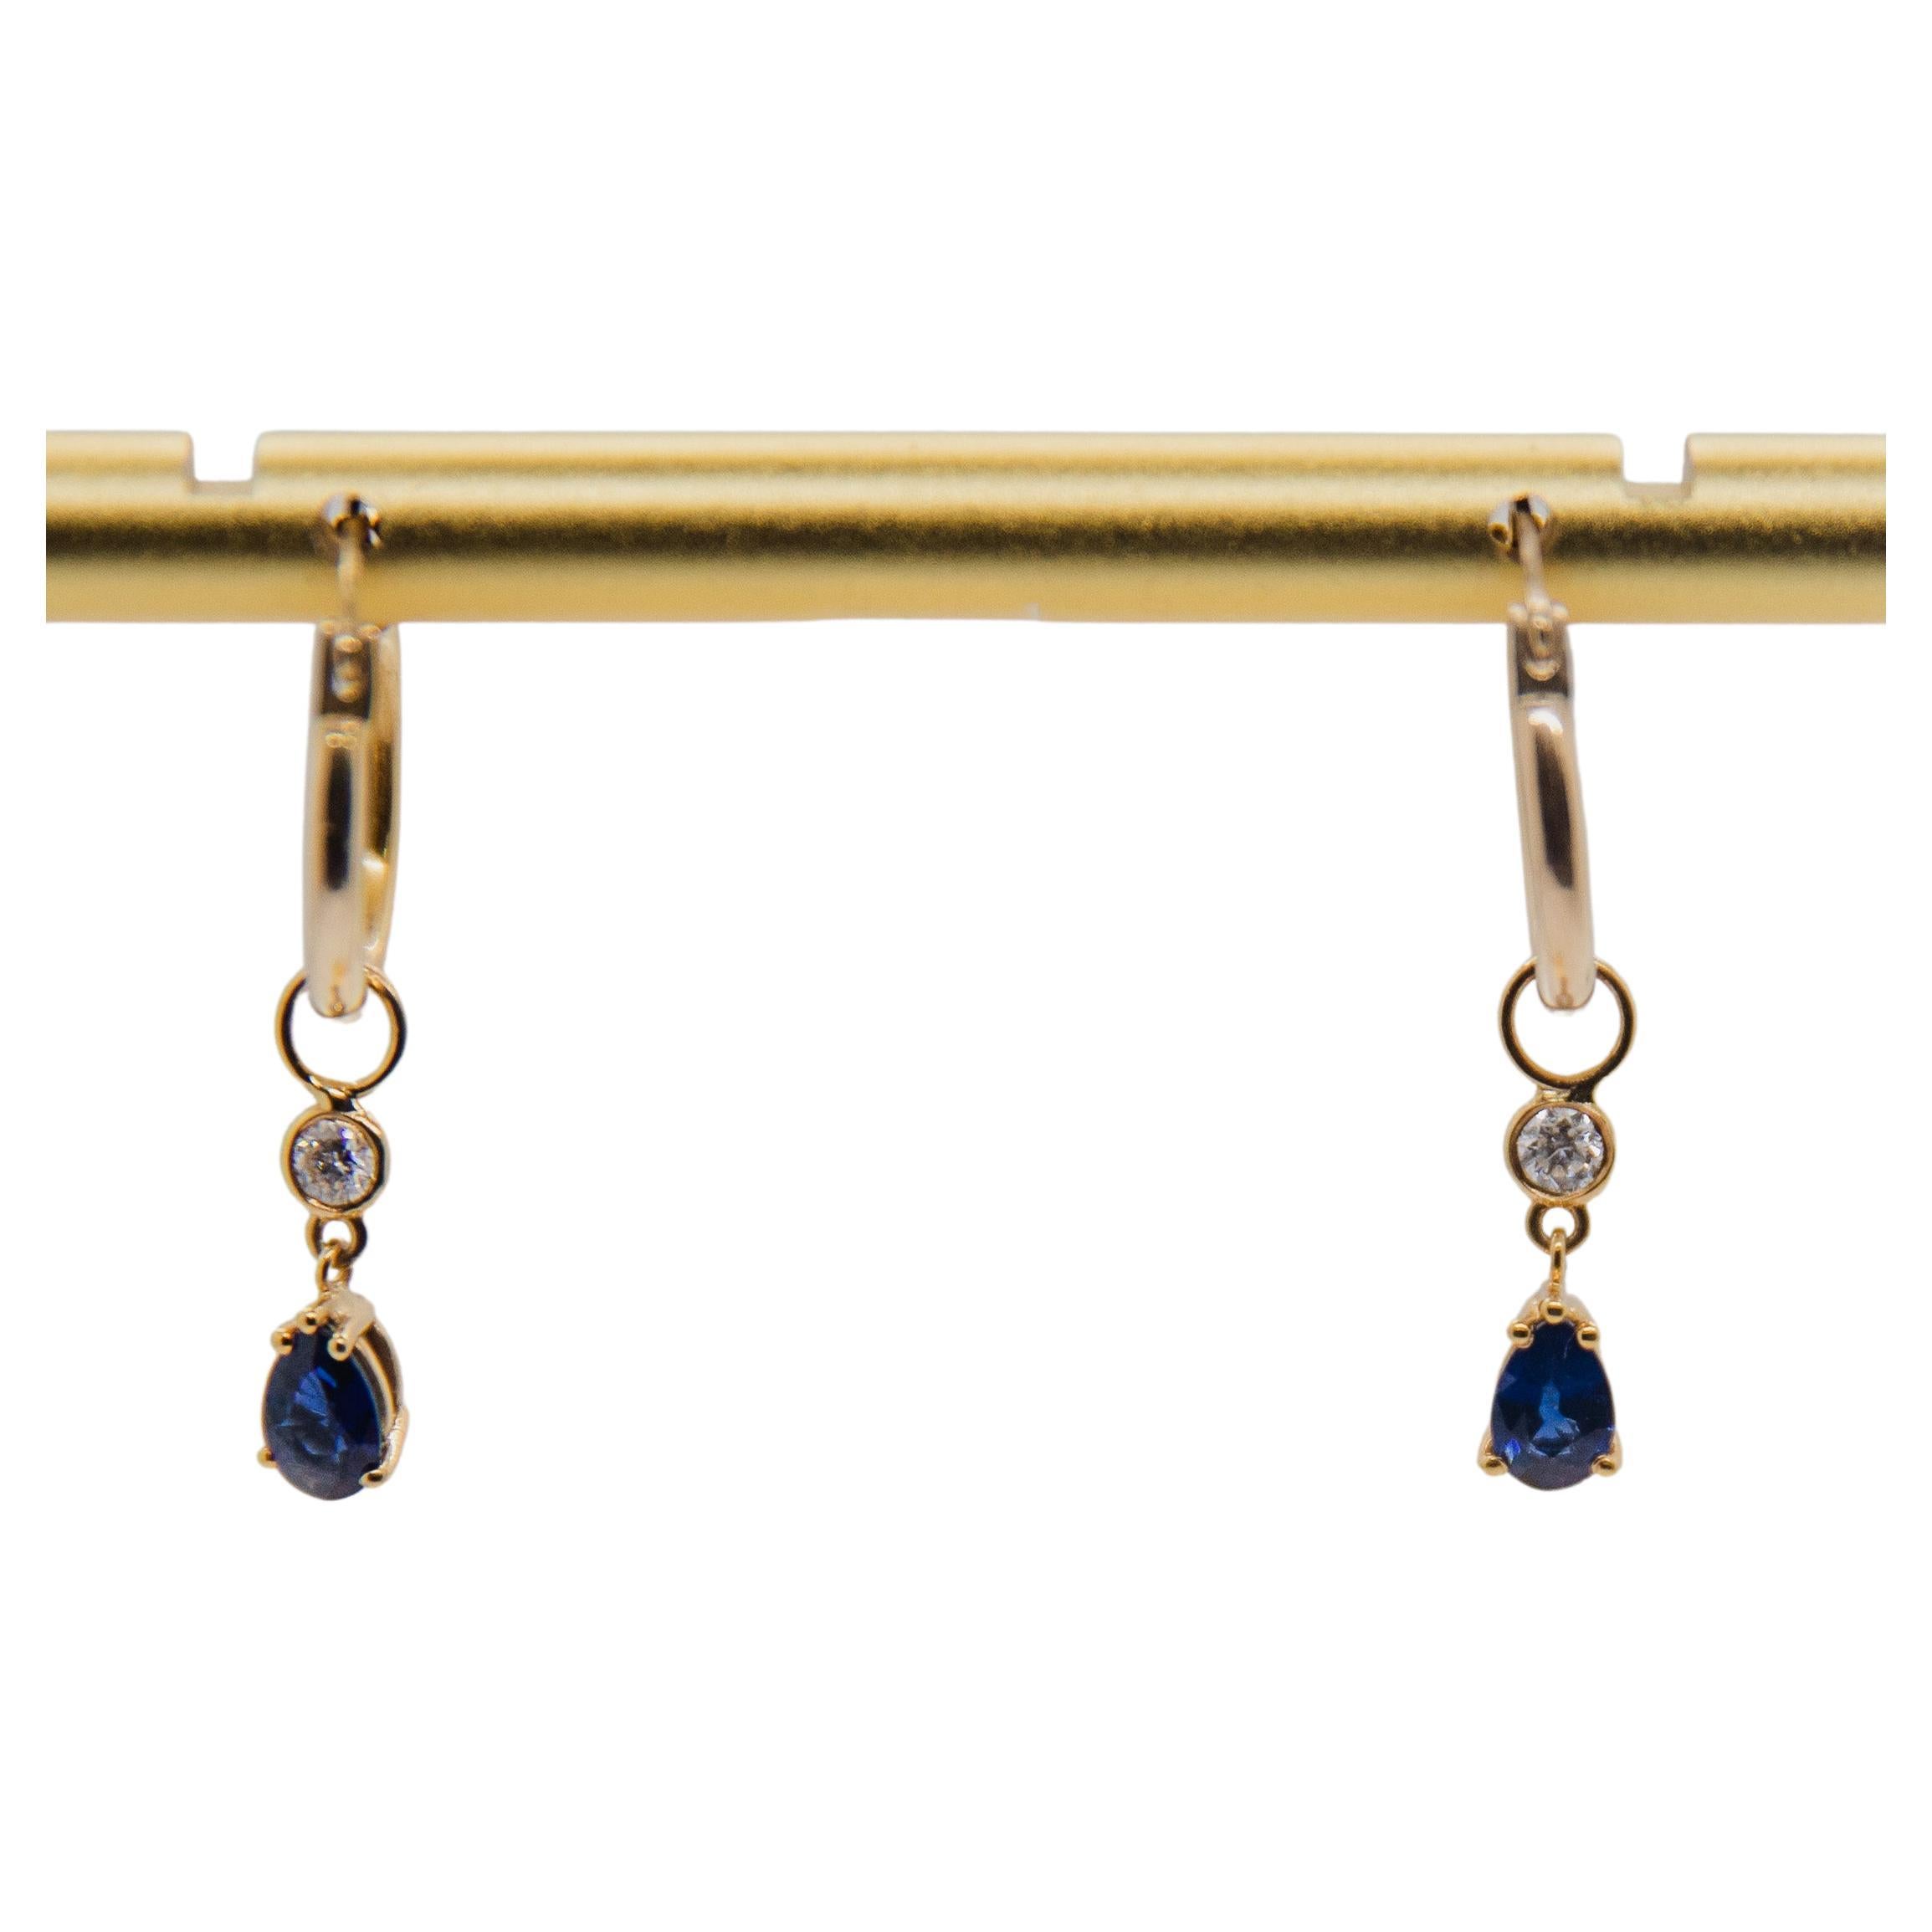 Detachable 1.20 Carat Sapphire and Diamond Charm Earring with Hoop Earring